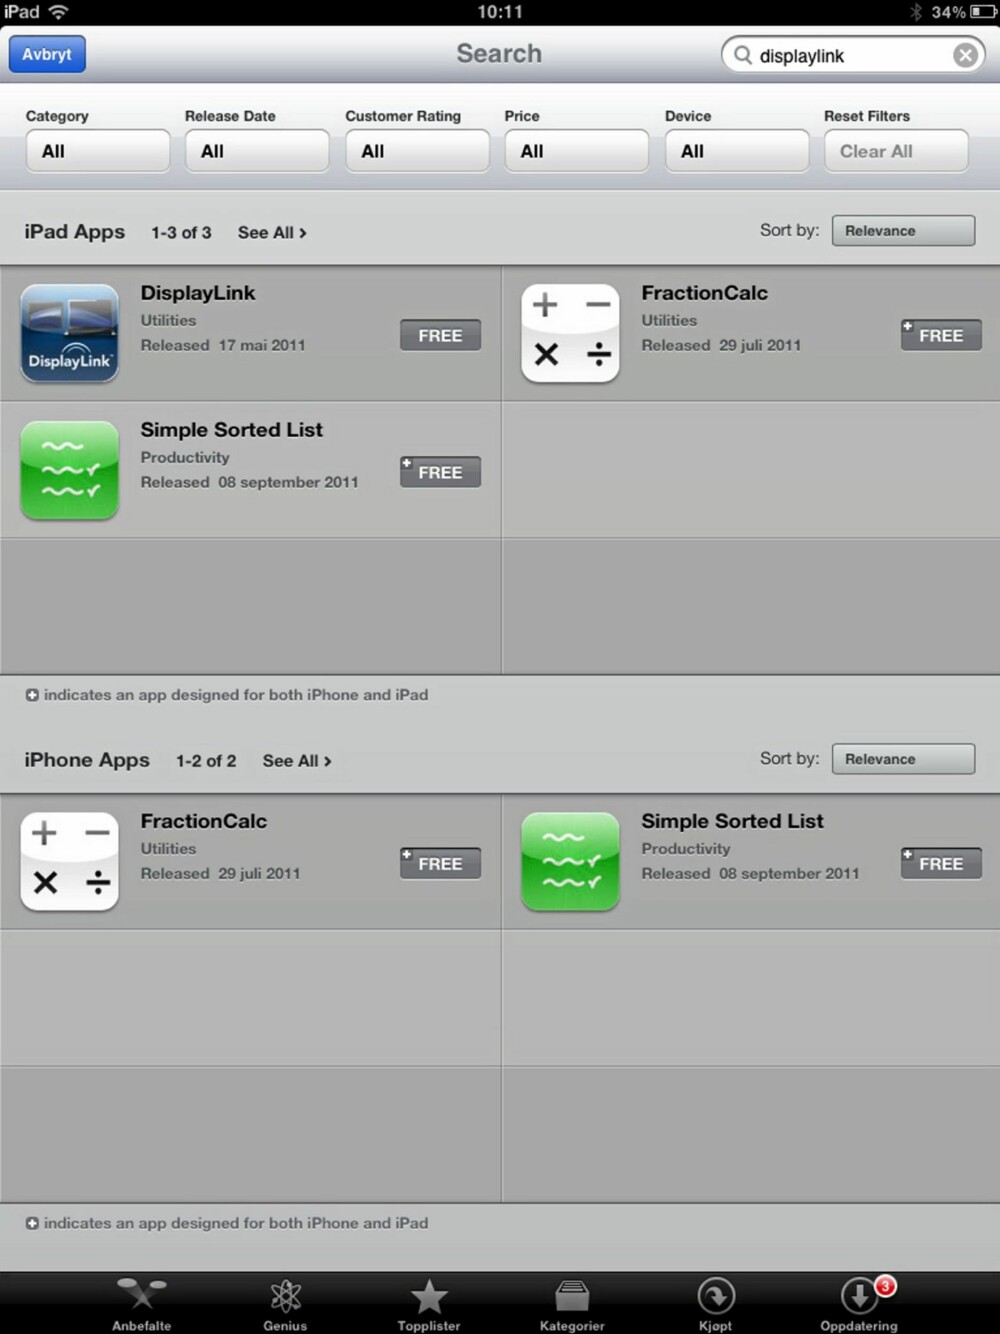 APP: Søk etter appen til Displaylink i App Store på din iPad og last ned denne.